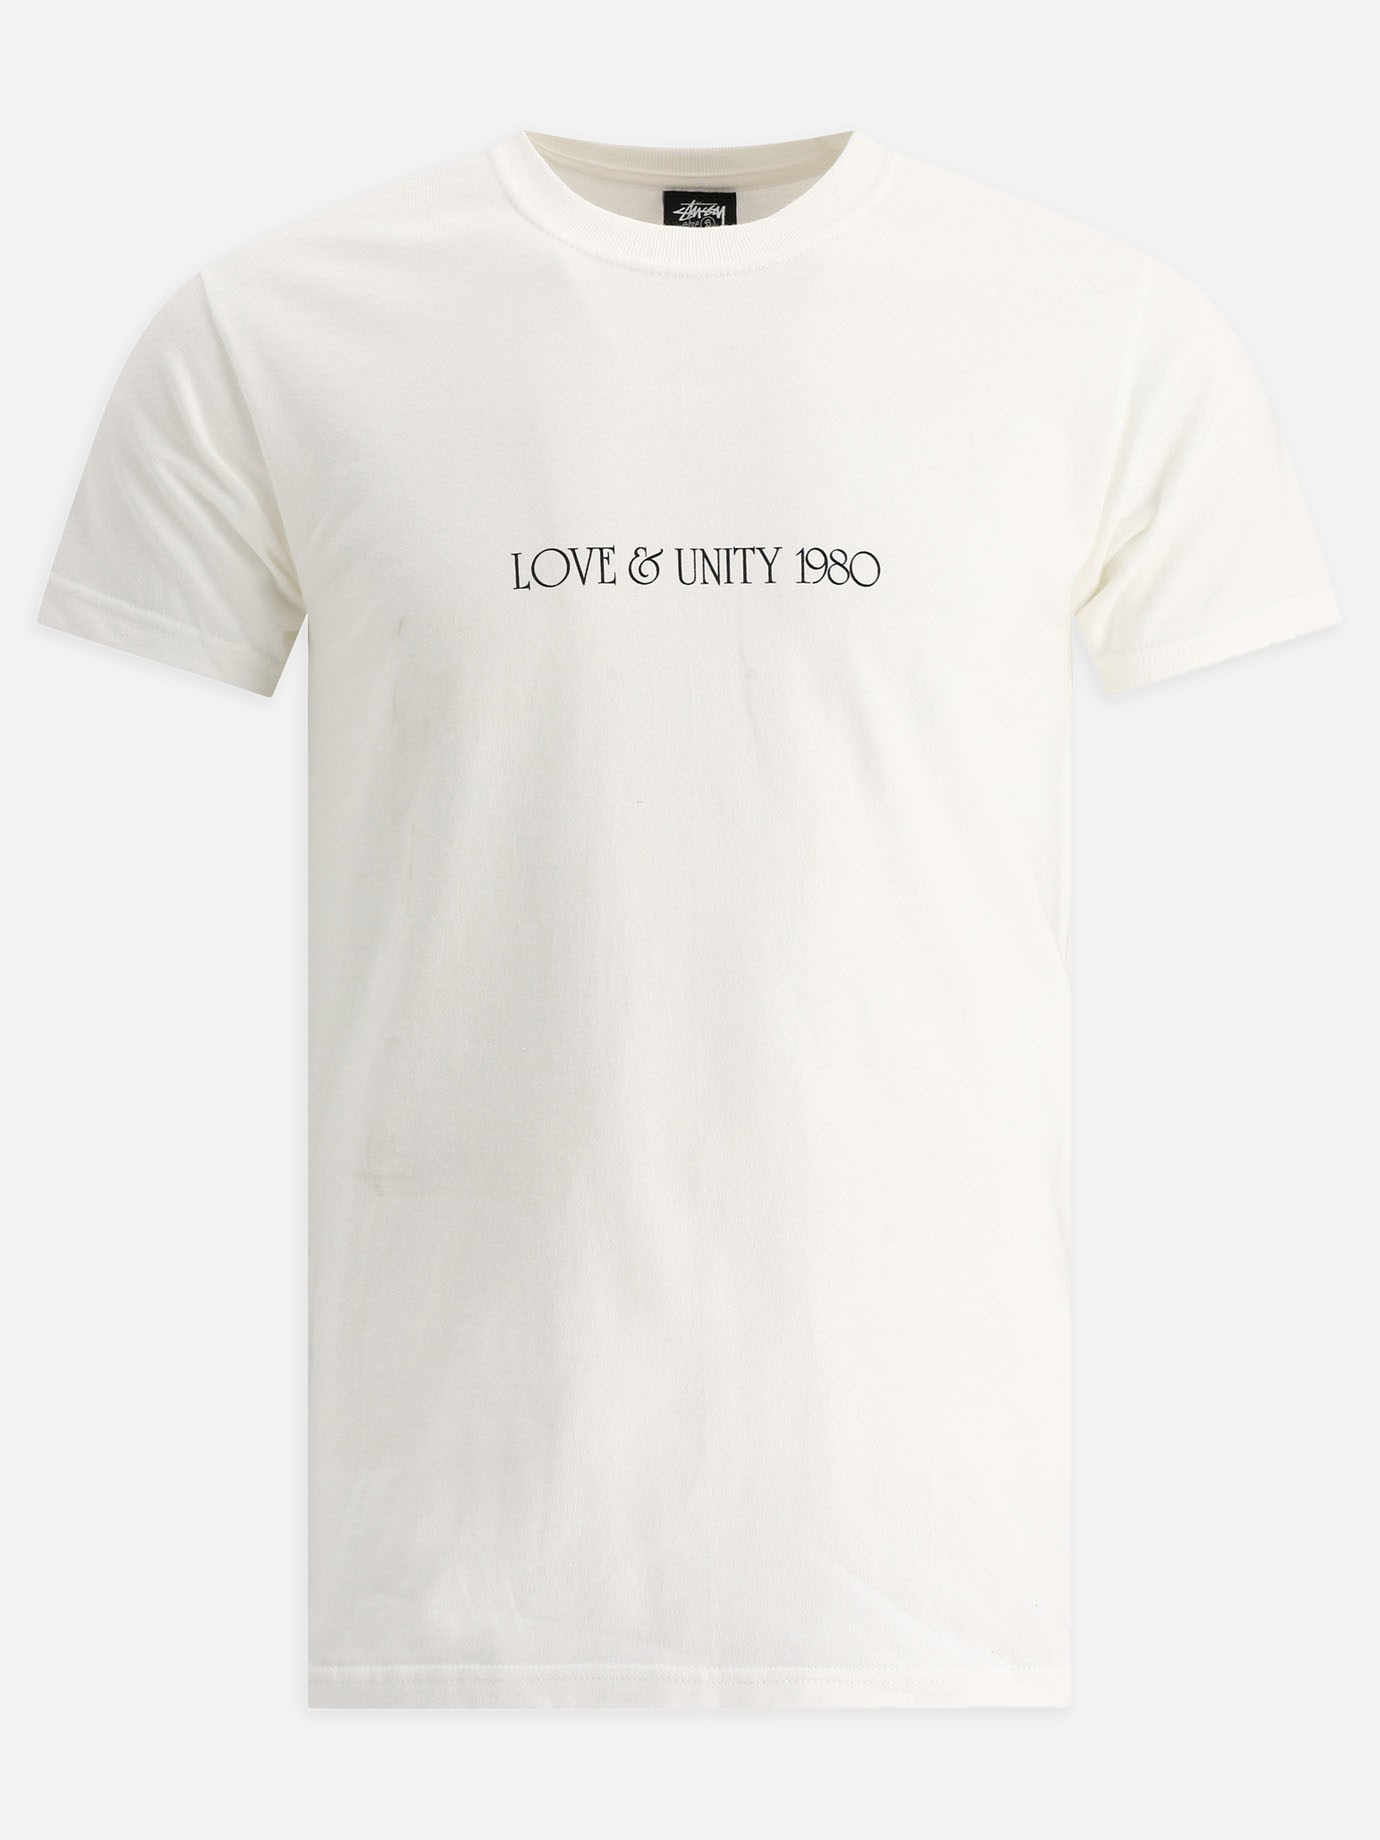  Love & Unity  t-shirtby Stüssy - 5